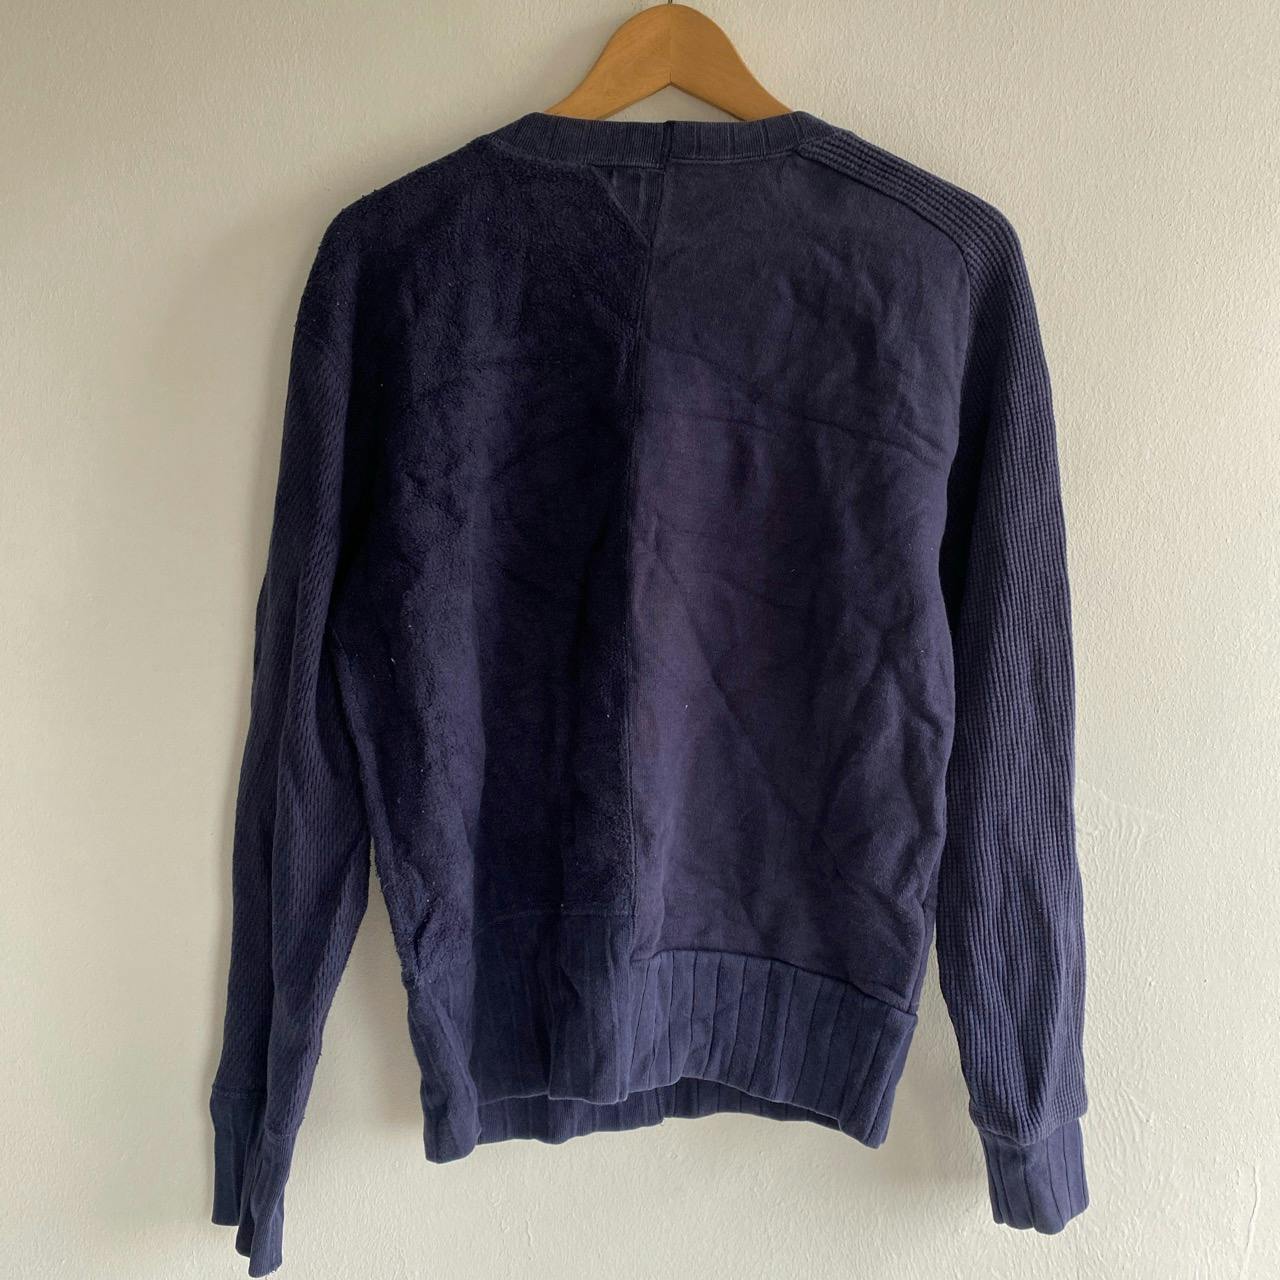 Nigel Cabourn Outer Limit Sweatshirt Pattern 1949 - 4